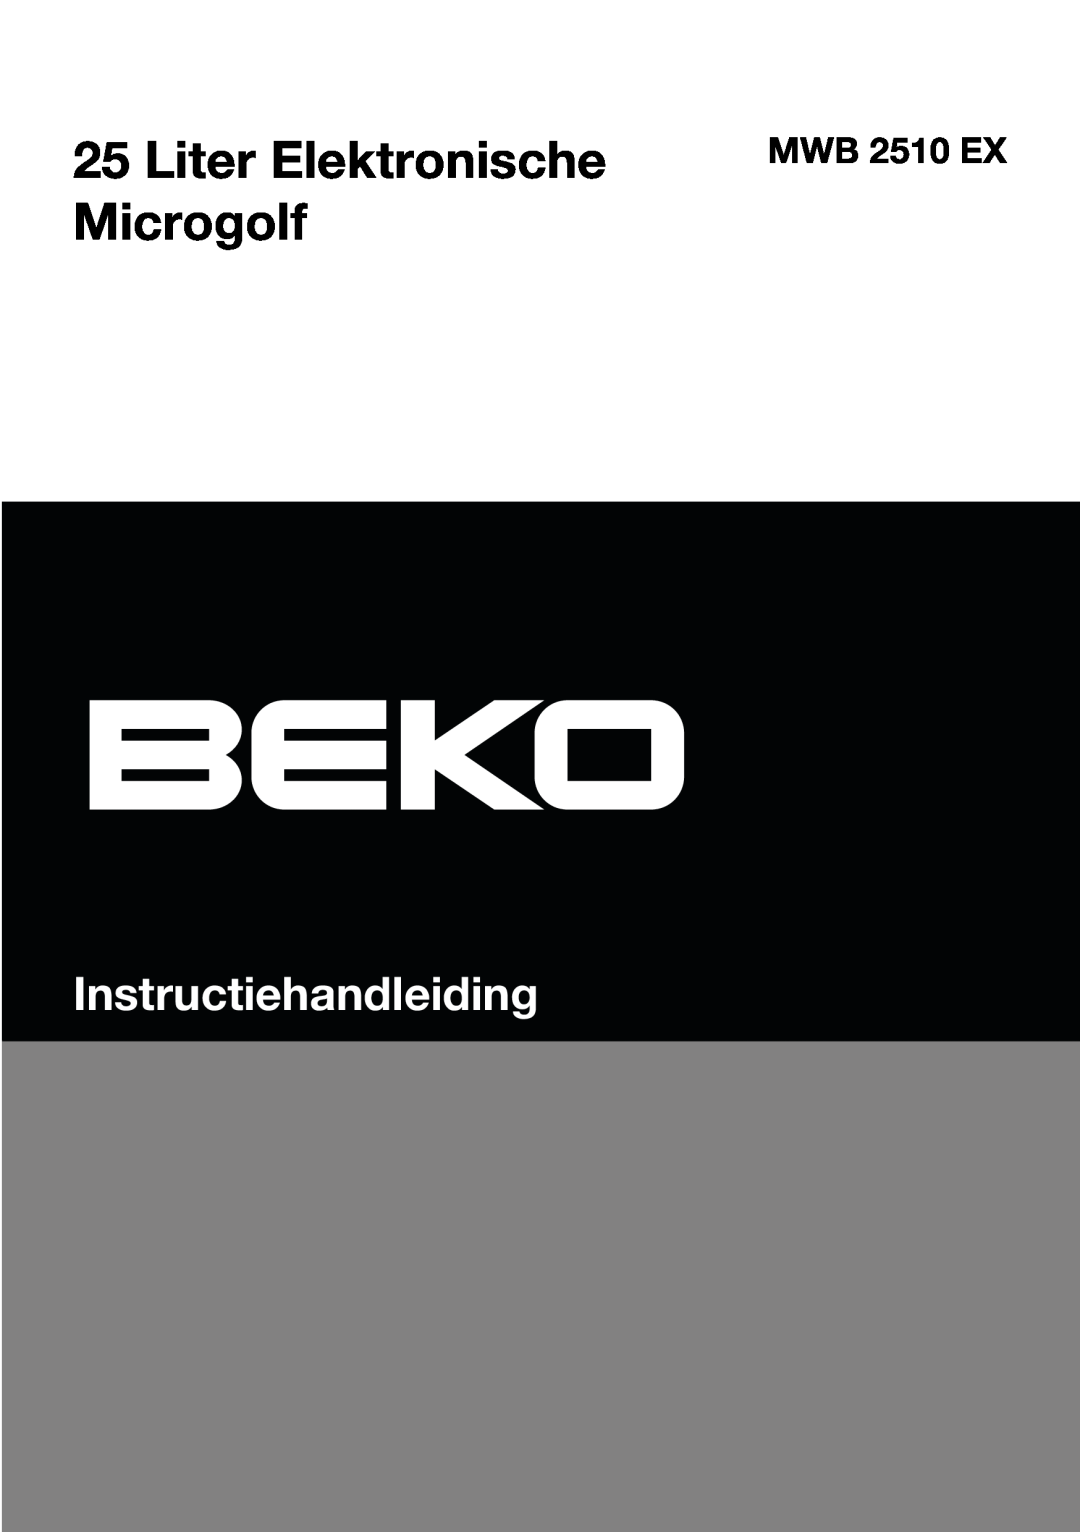 Beko MWB 2510 EX instruction manual Instructiehandleiding, Liter Elektronische Microgolf 